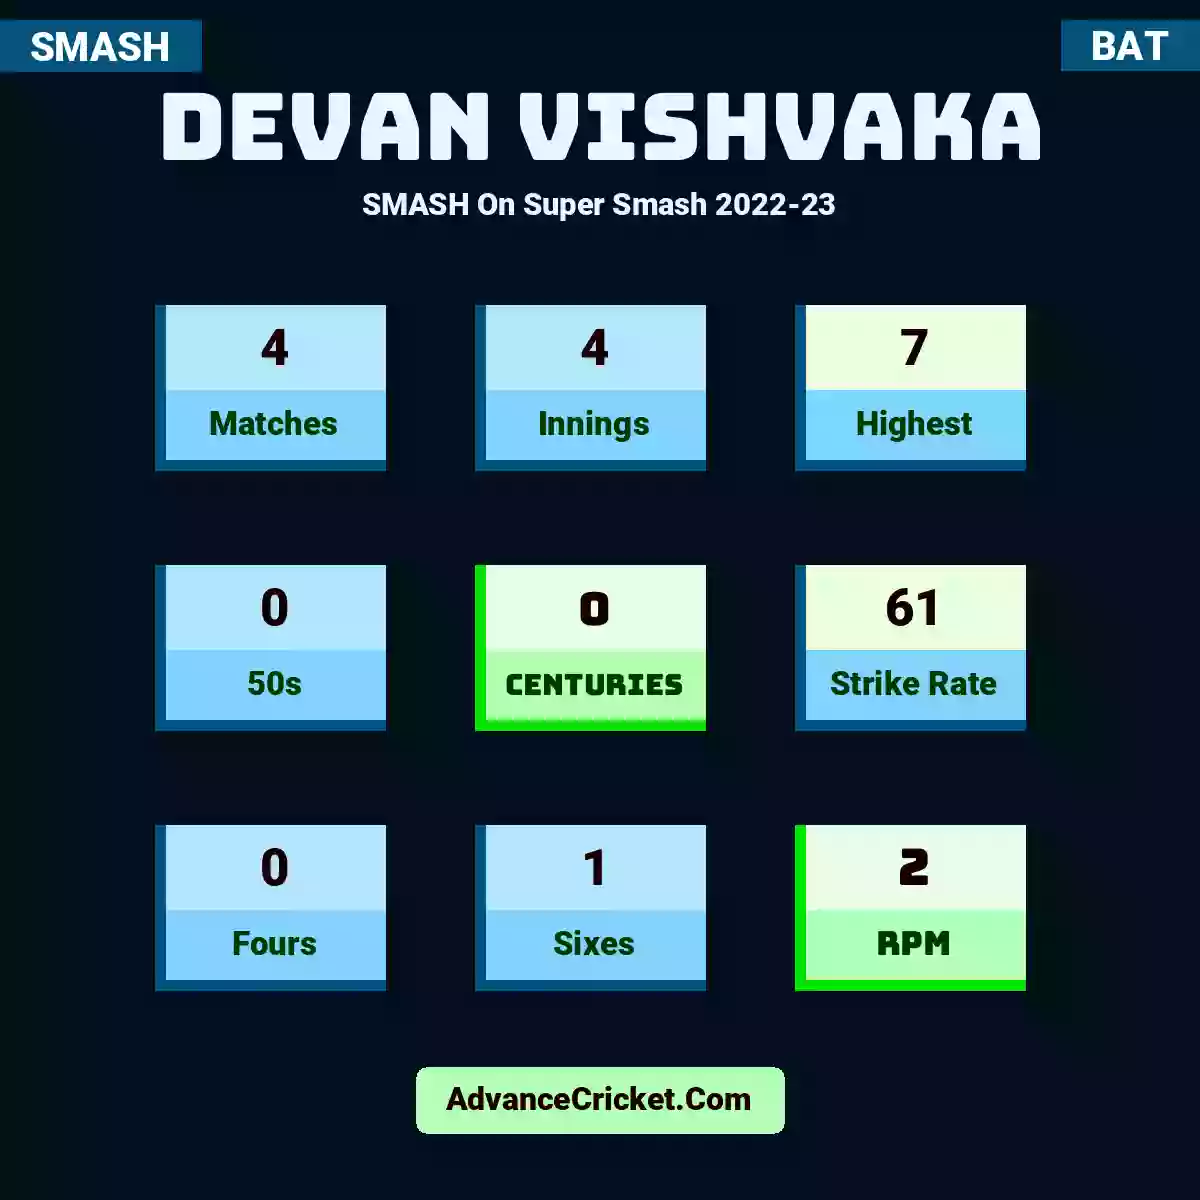 Devan Vishvaka SMASH  On Super Smash 2022-23, Devan Vishvaka played 4 matches, scored 7 runs as highest, 0 half-centuries, and 0 centuries, with a strike rate of 61. D.Vishvaka hit 0 fours and 1 sixes, with an RPM of 2.